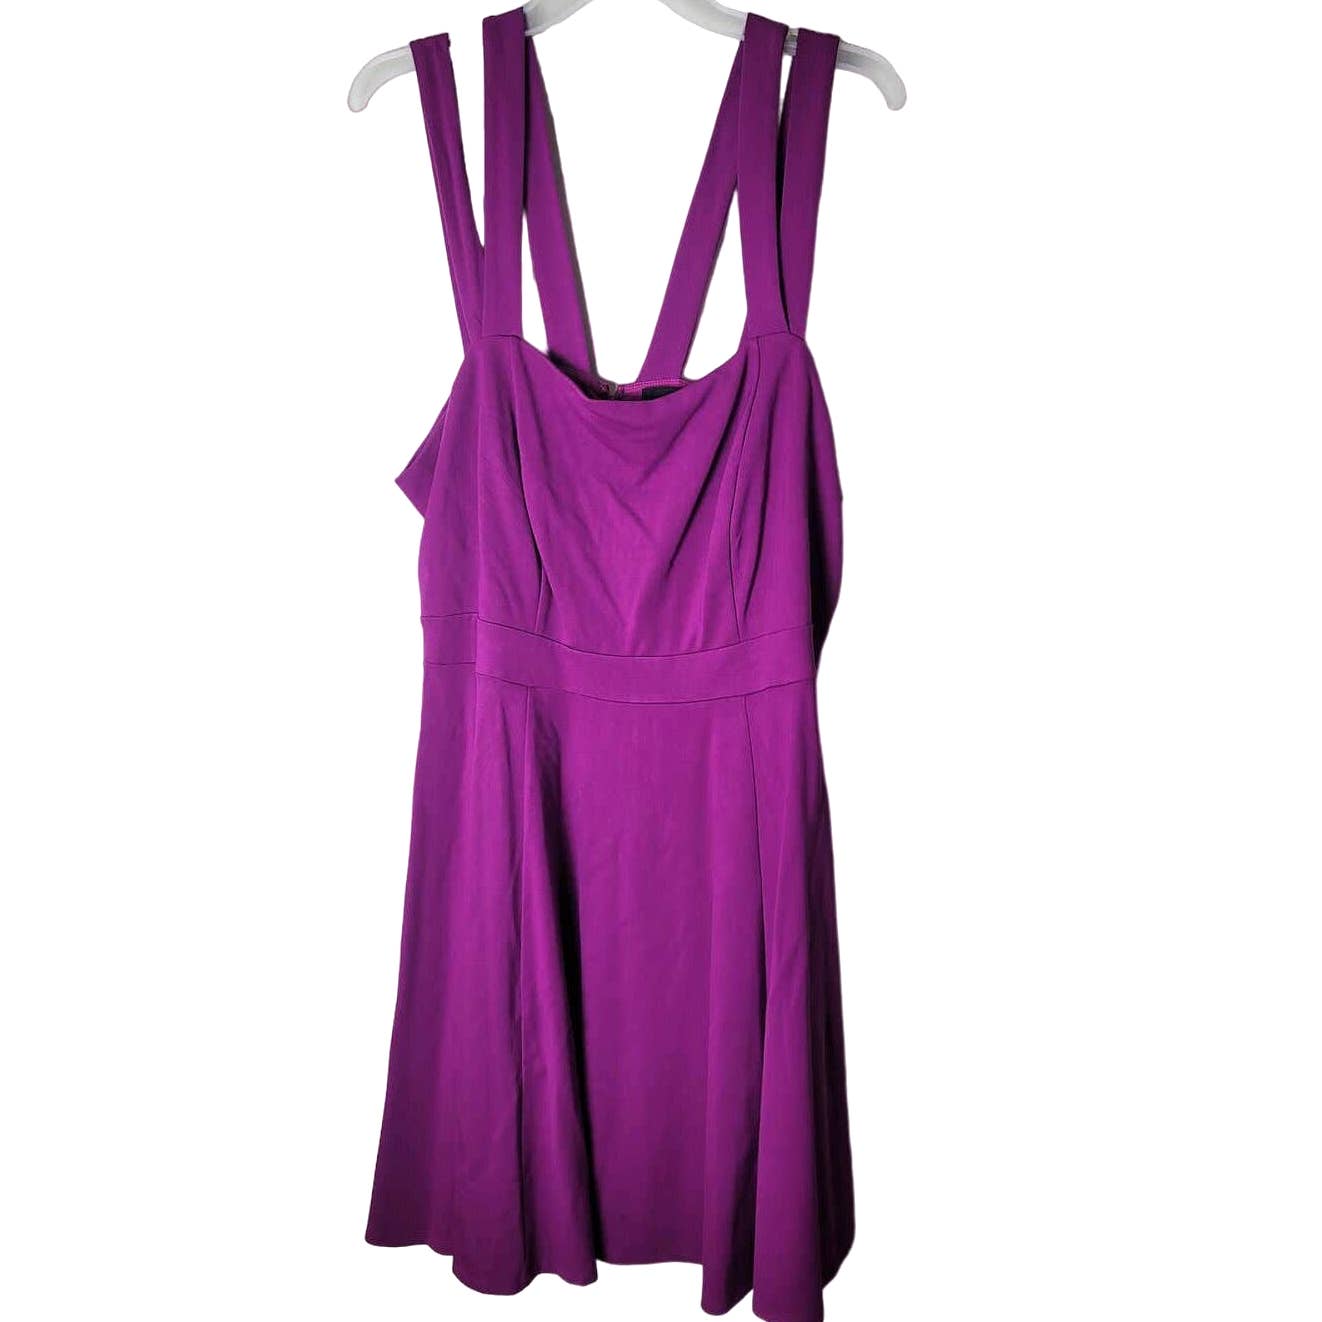 Torrid Mini Skater Dress Purple Strappy Sleeveless Fit Flare Plus Size 18